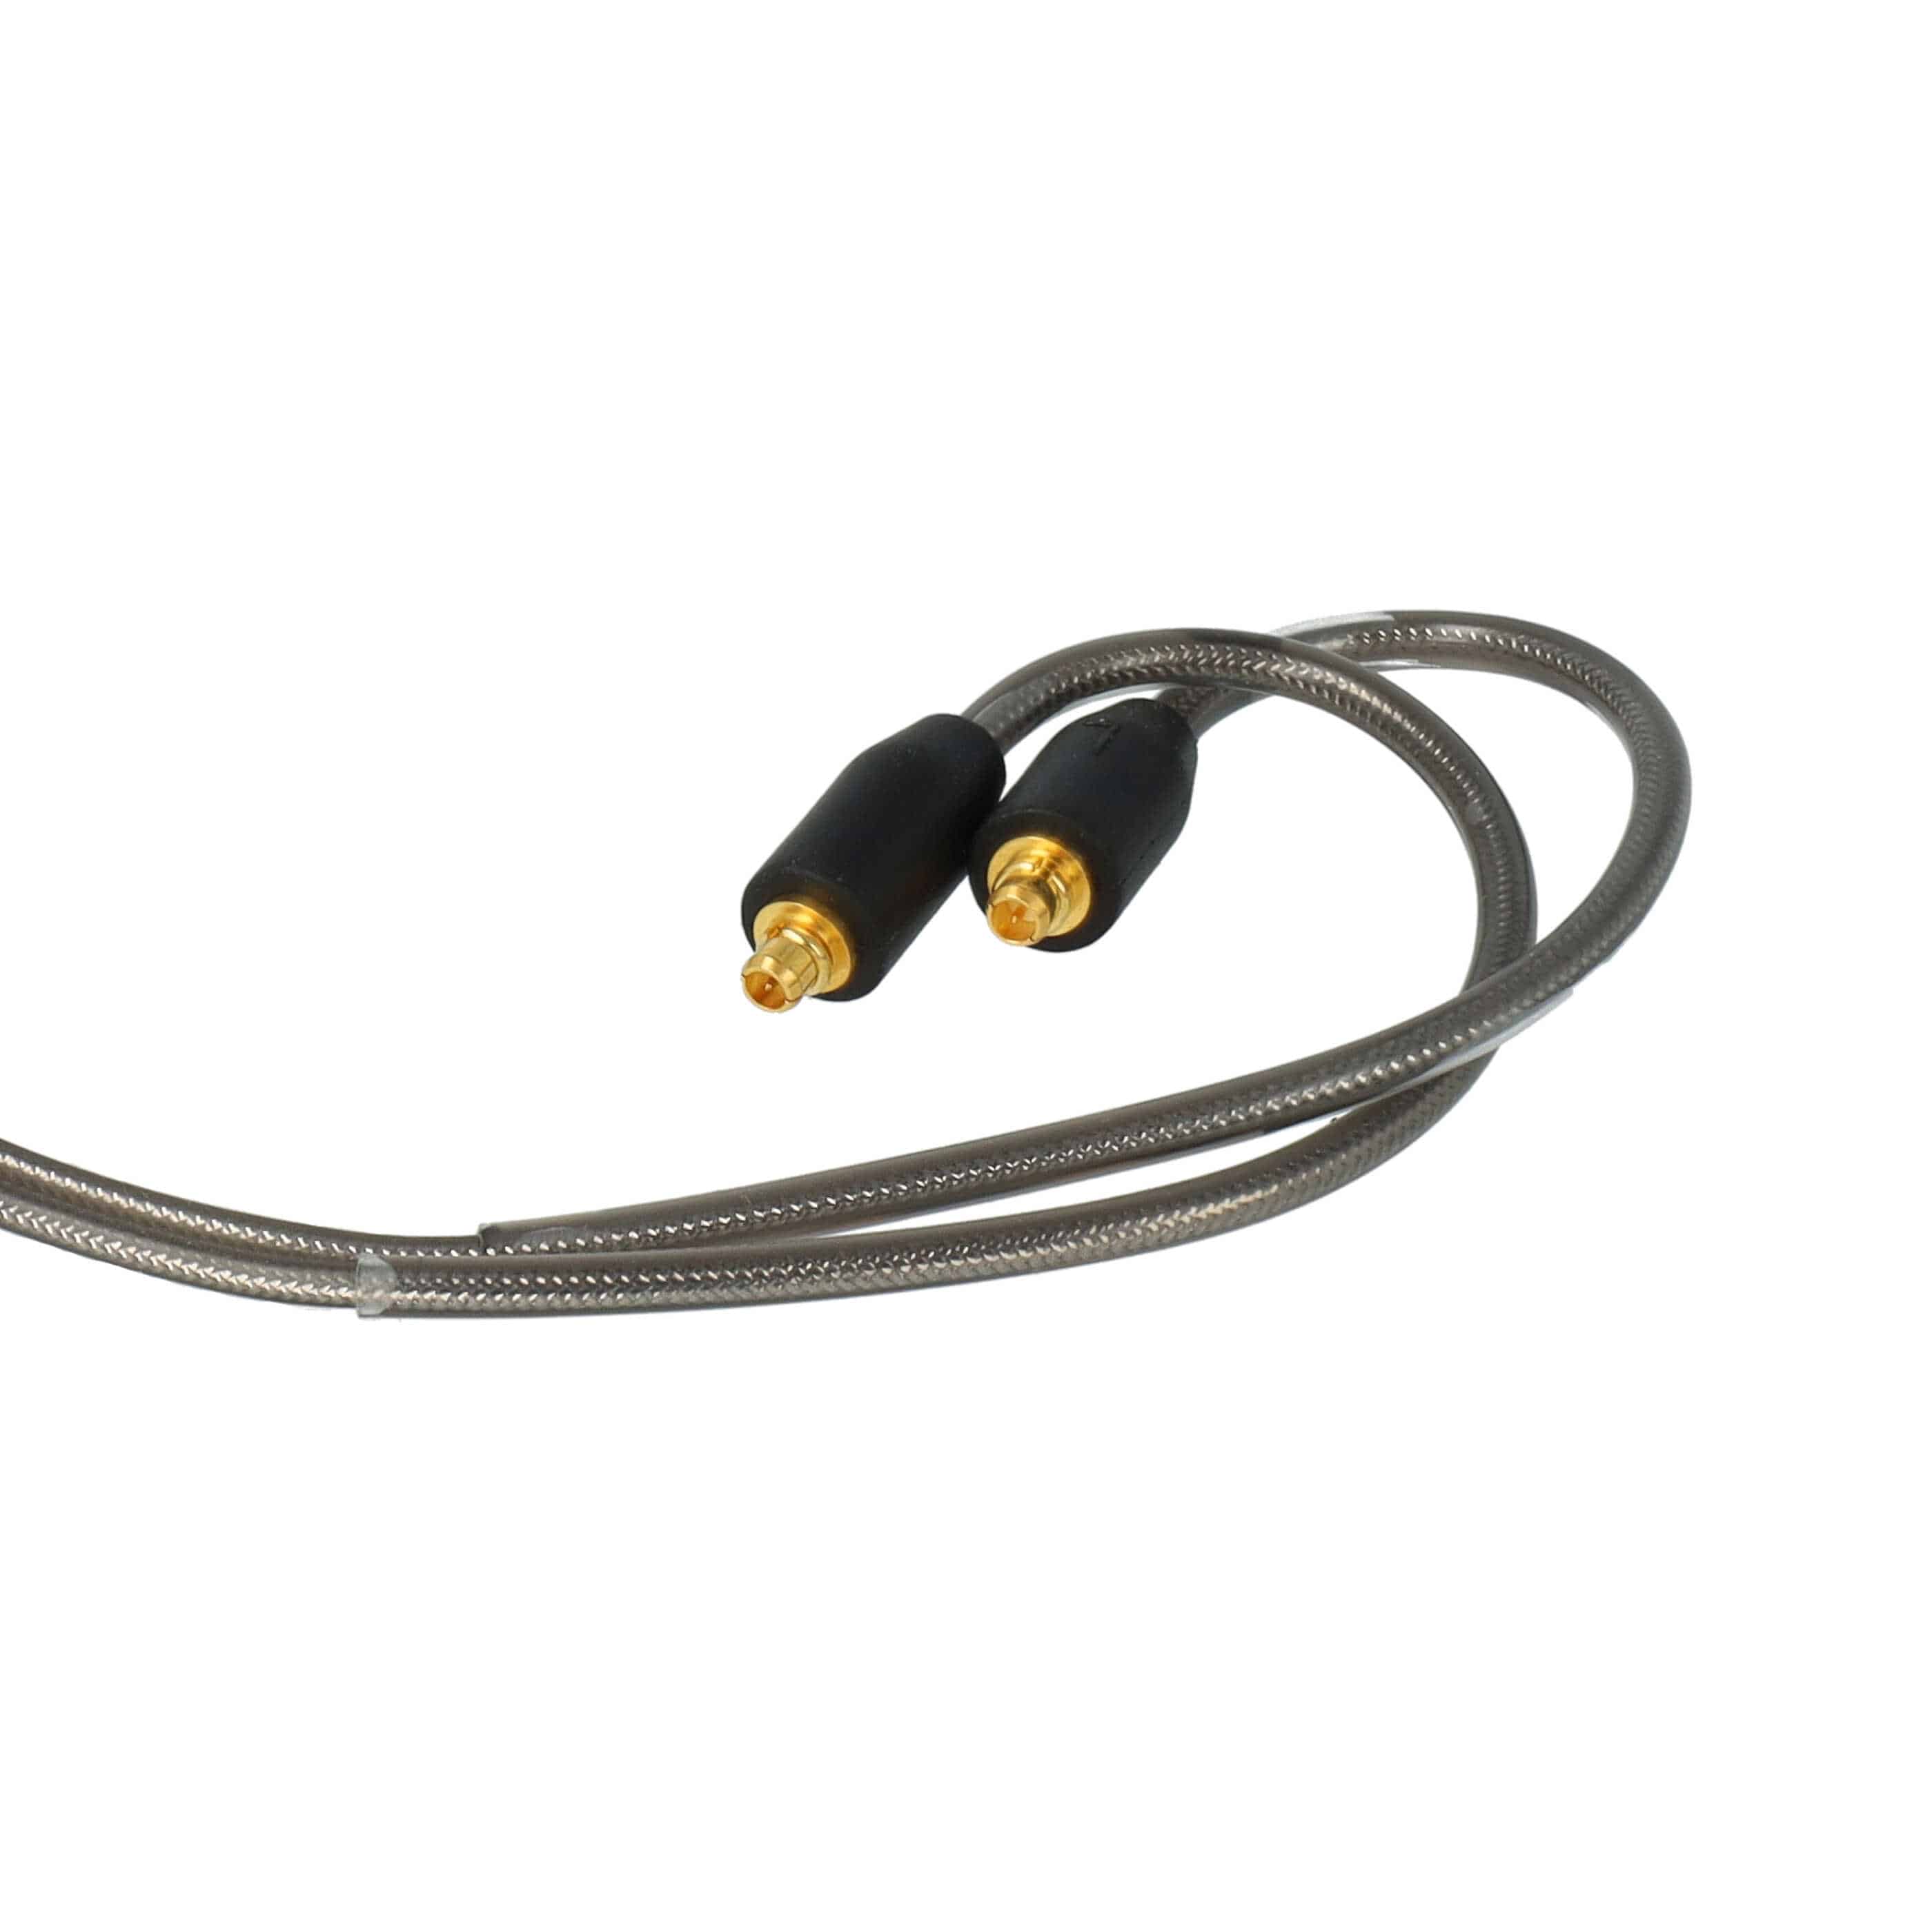 Kopfhörer Kabel passend für Shure u.a., 120 cm, grau